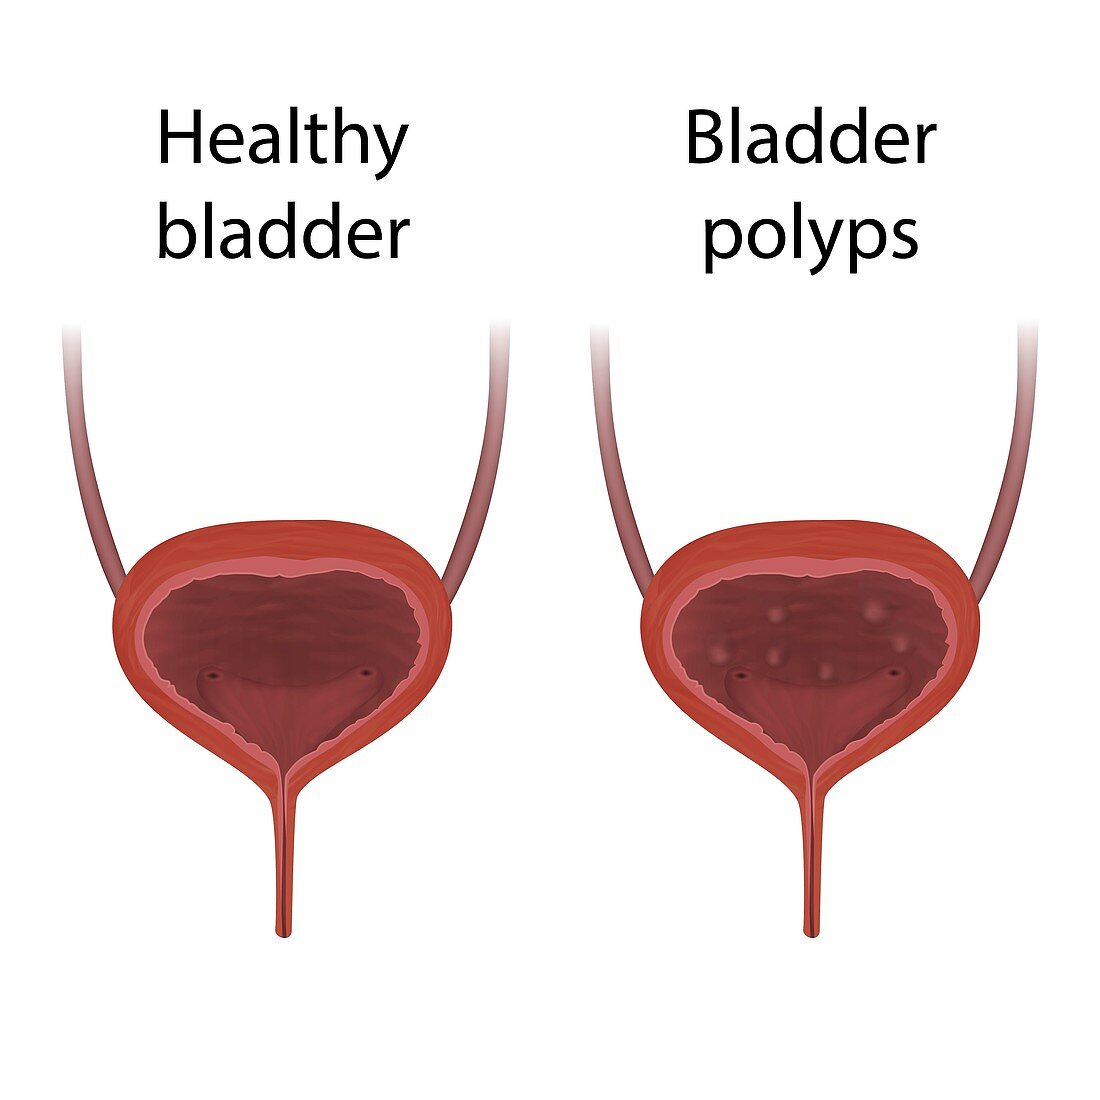 Bladder polyps and healthy bladder,illustration